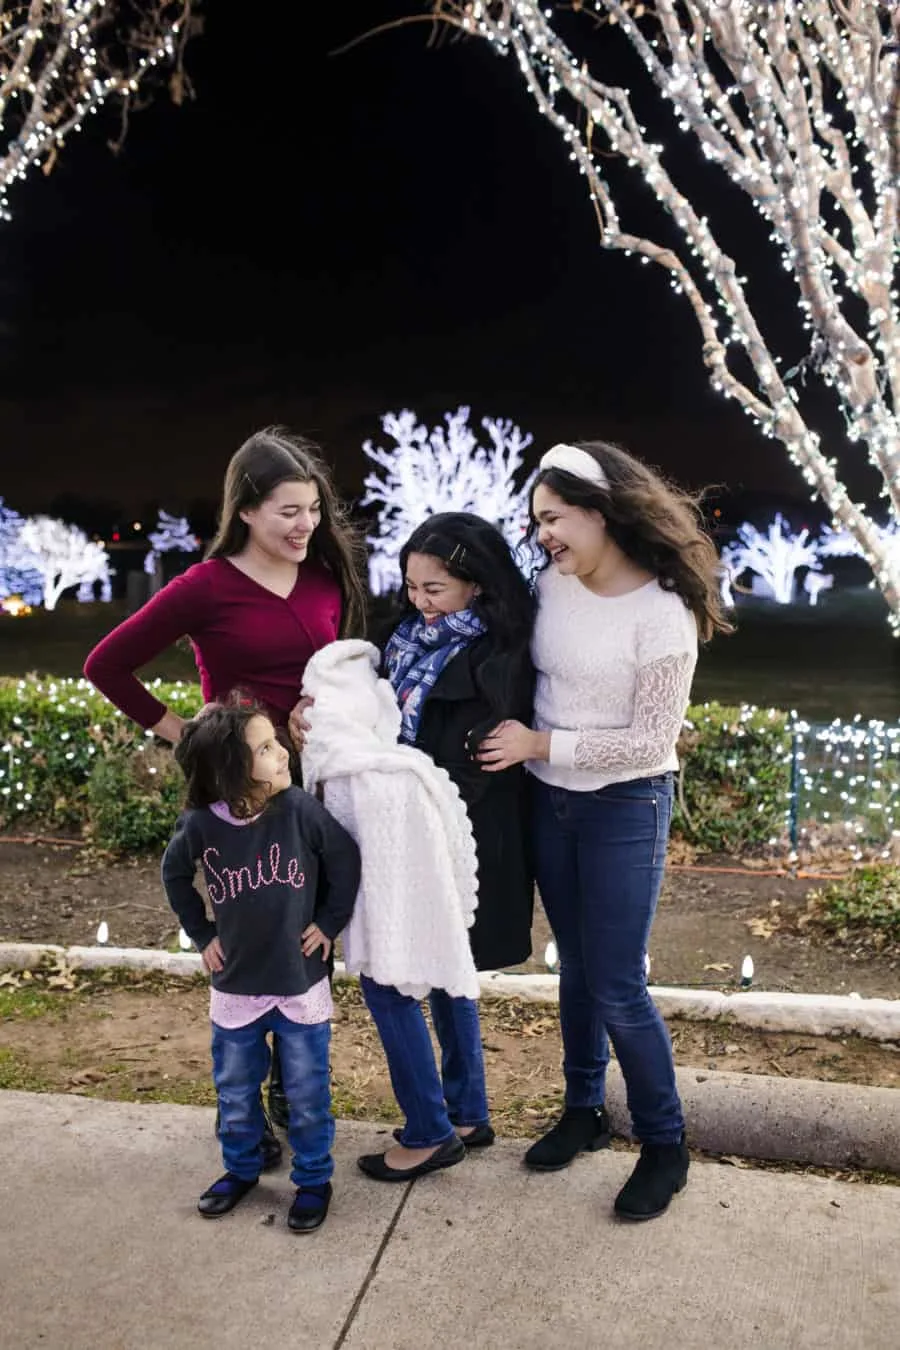 Daystar Dallas Fort Worth Christmas lights decorations